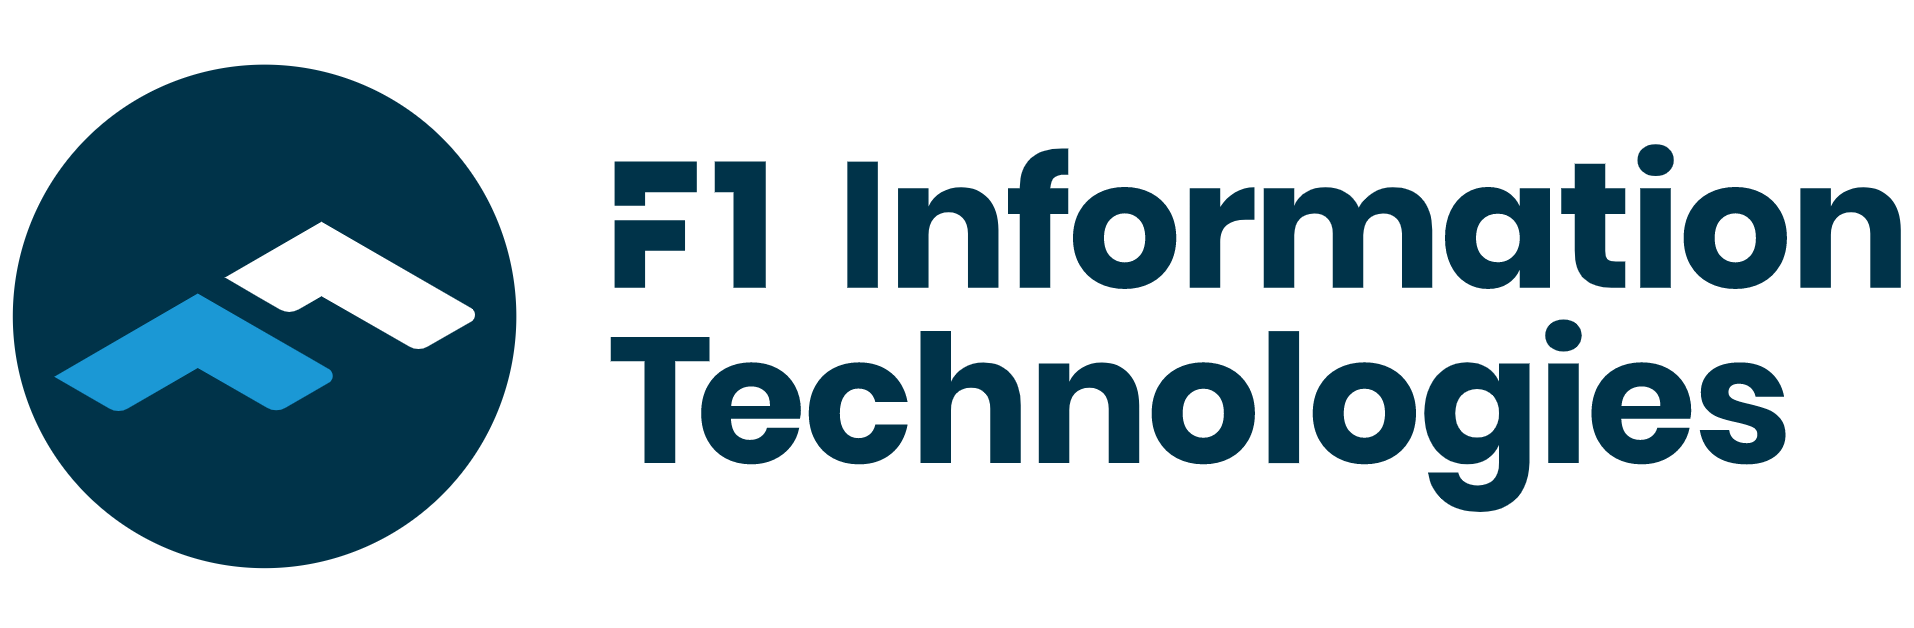 F1 Information Technologies Inc Logo